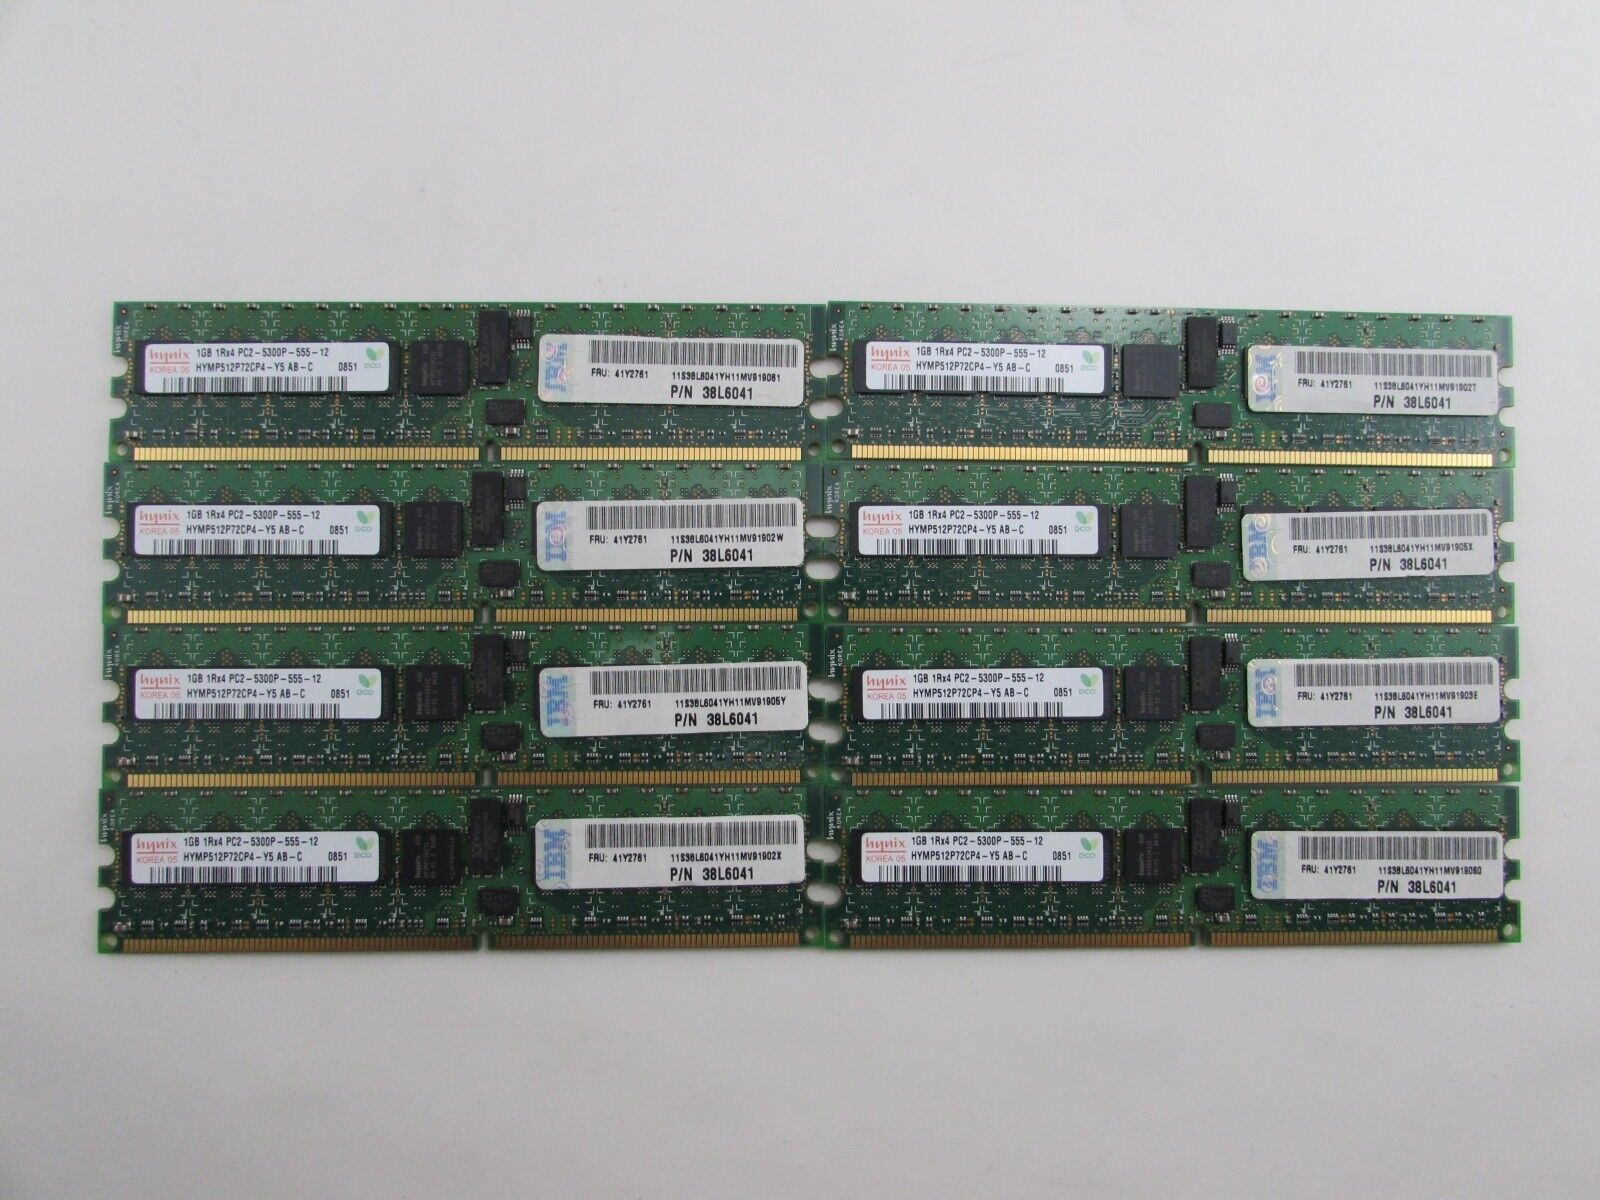 IBM 38L6041 Hynix 8GB 8 x 1GB PC2-5300P DDR2 667 CL5 ECC RDIMM Server Memory Kit